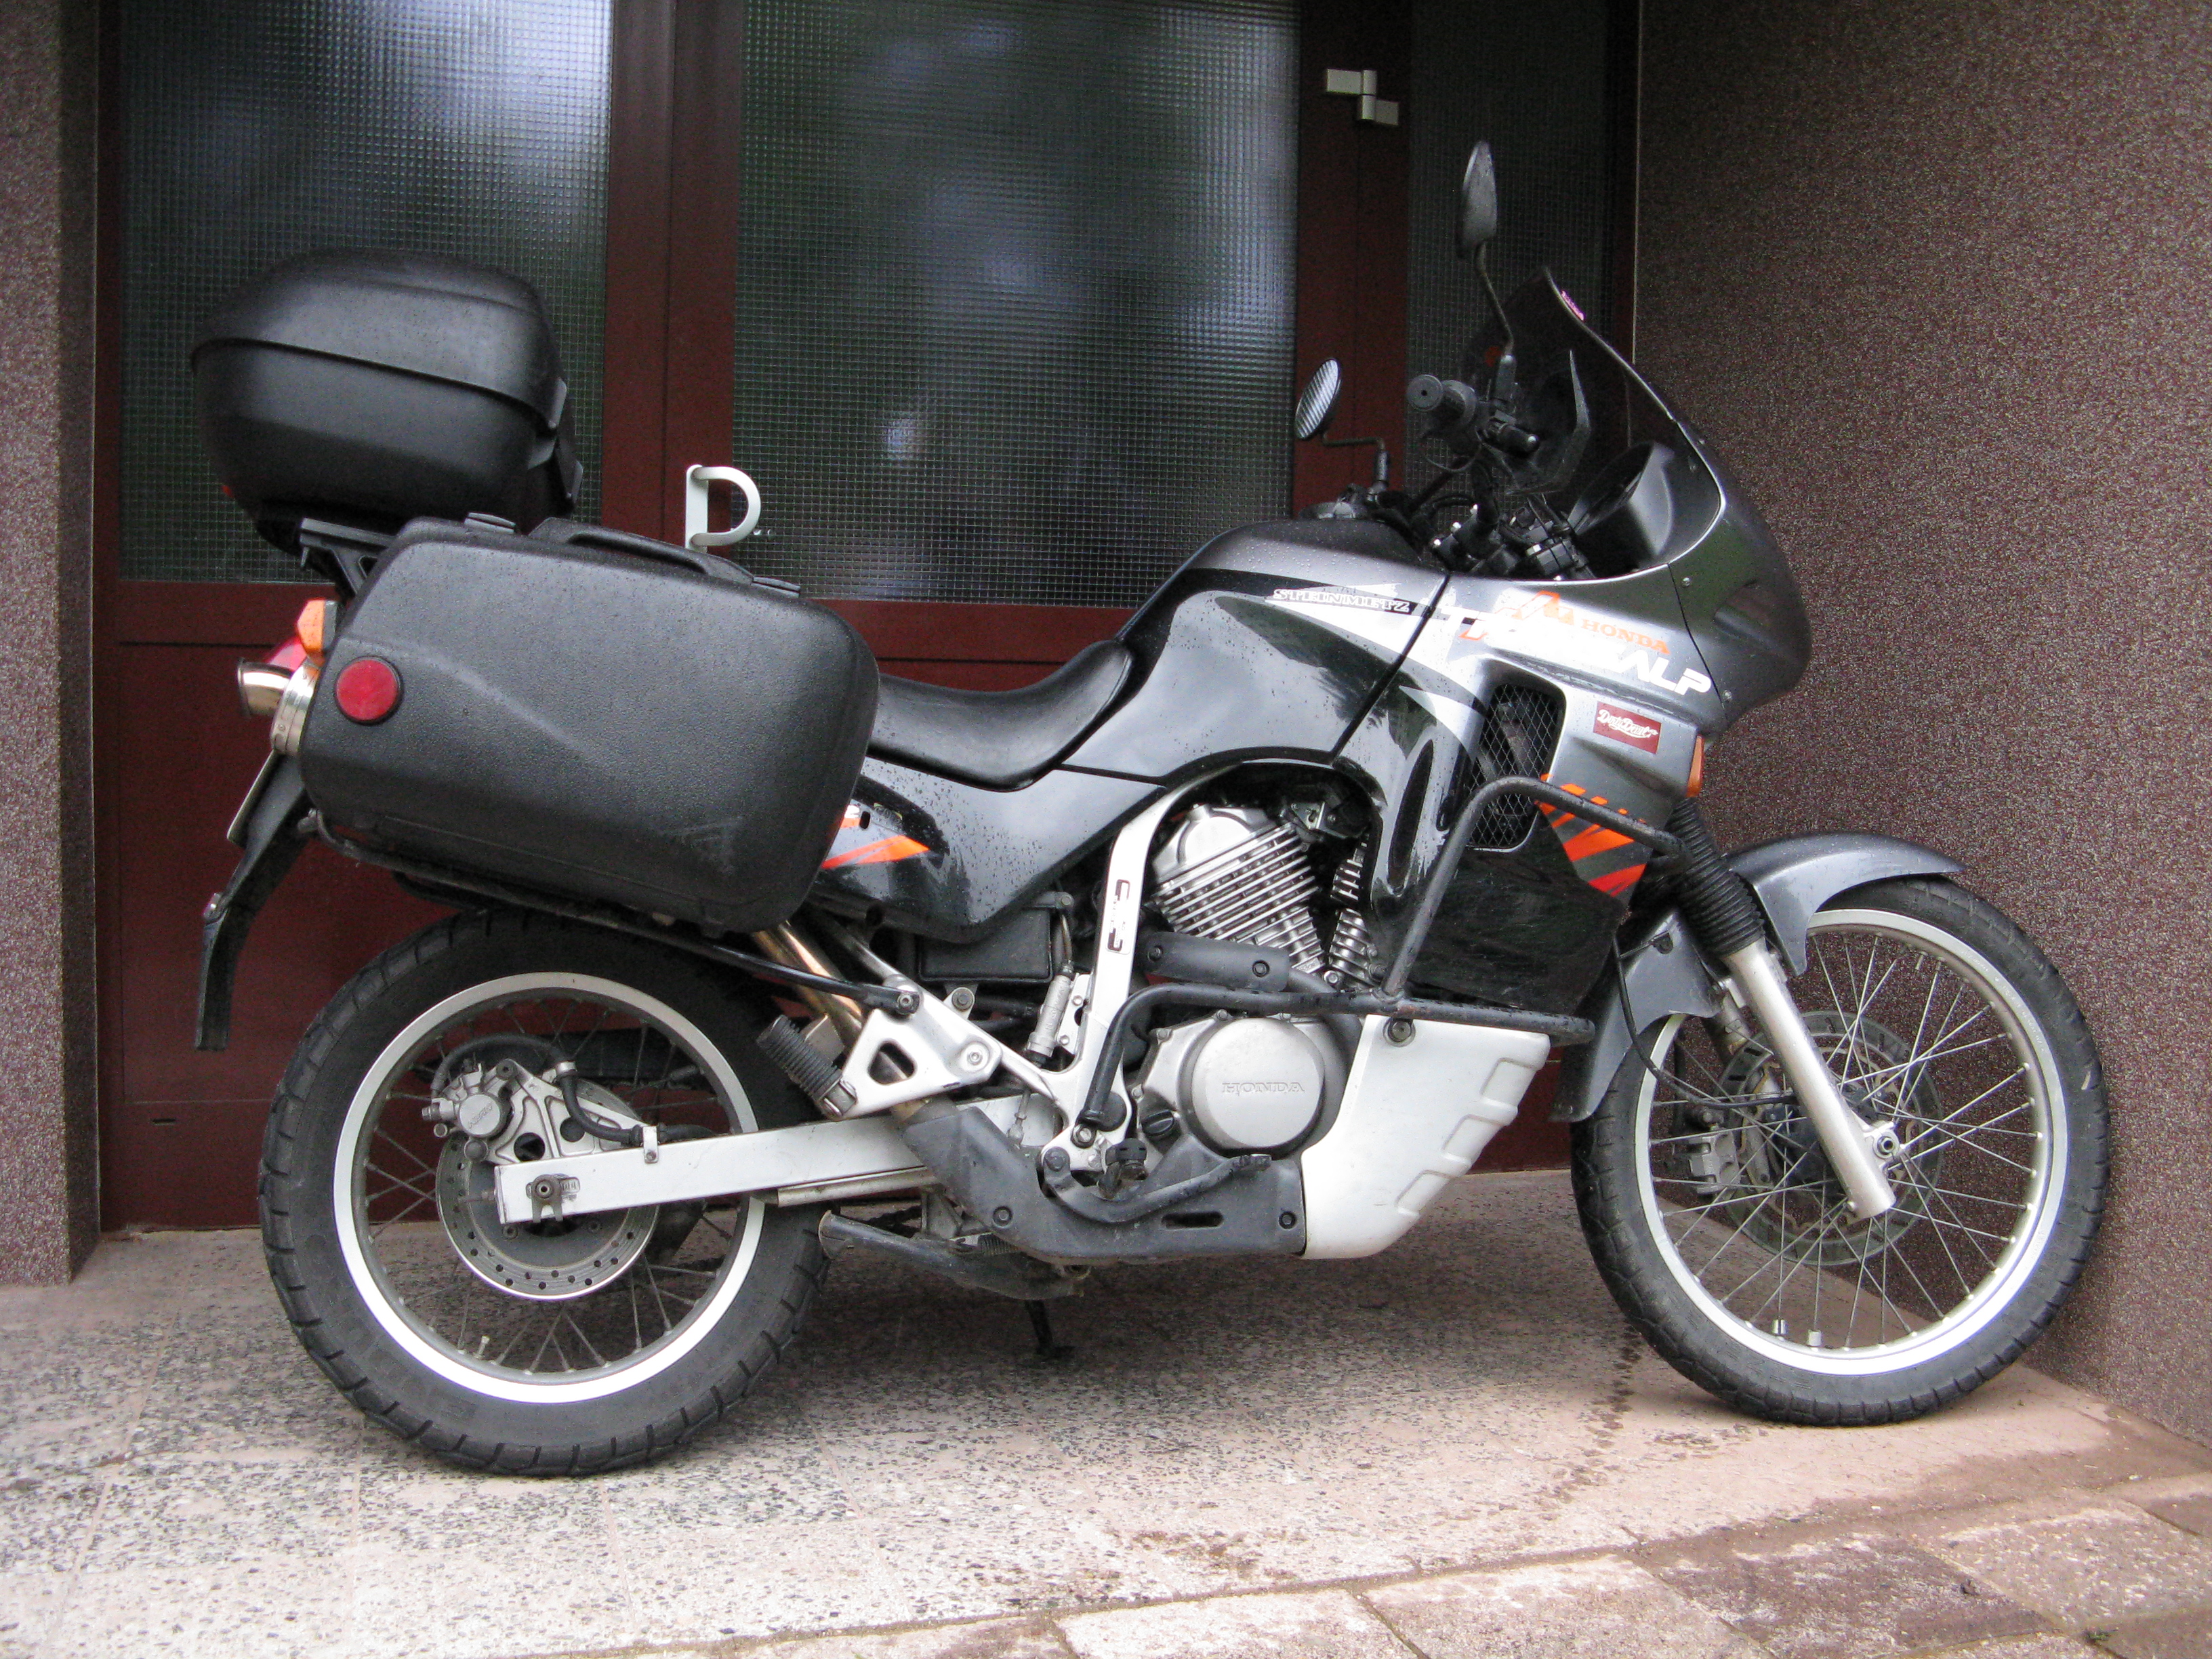 Обзор мотоцикла honda xl 650 v transalp — bikeswiki - энциклопедия японских мотоциклов